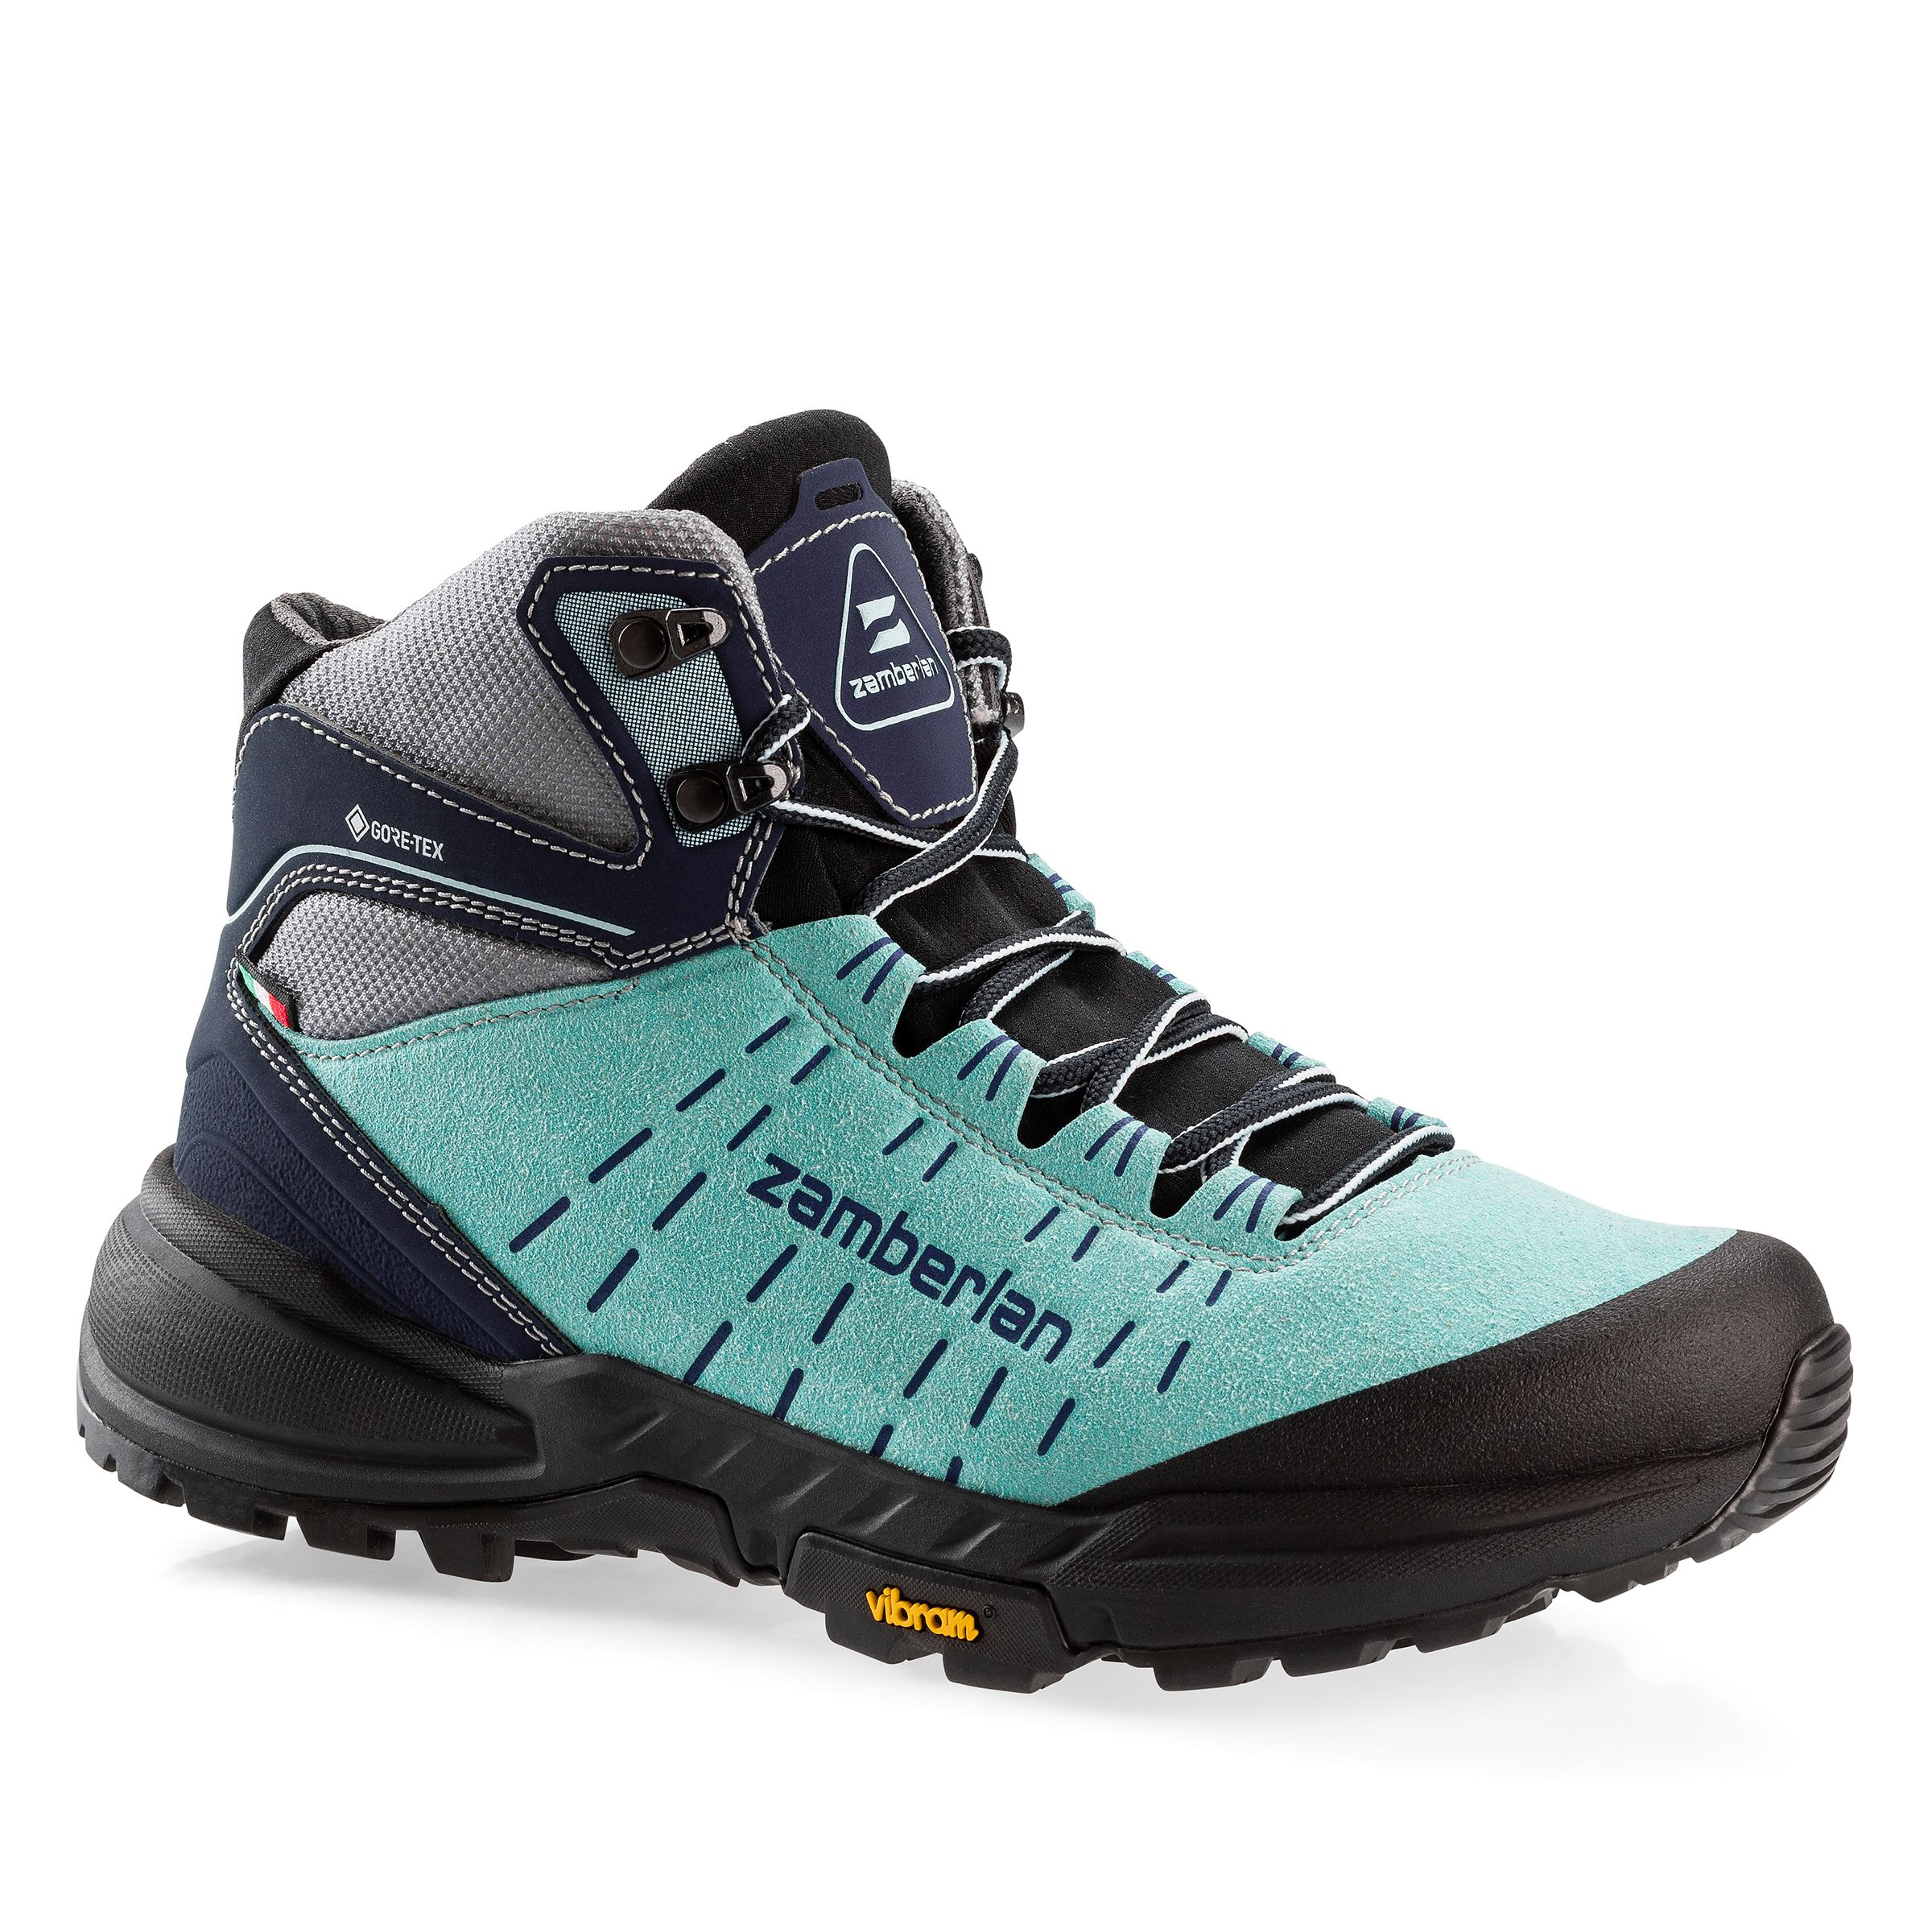 Zamberlan 334 Circe GTX Waterproof Hiking Boots for Ladies - Blue - 7M